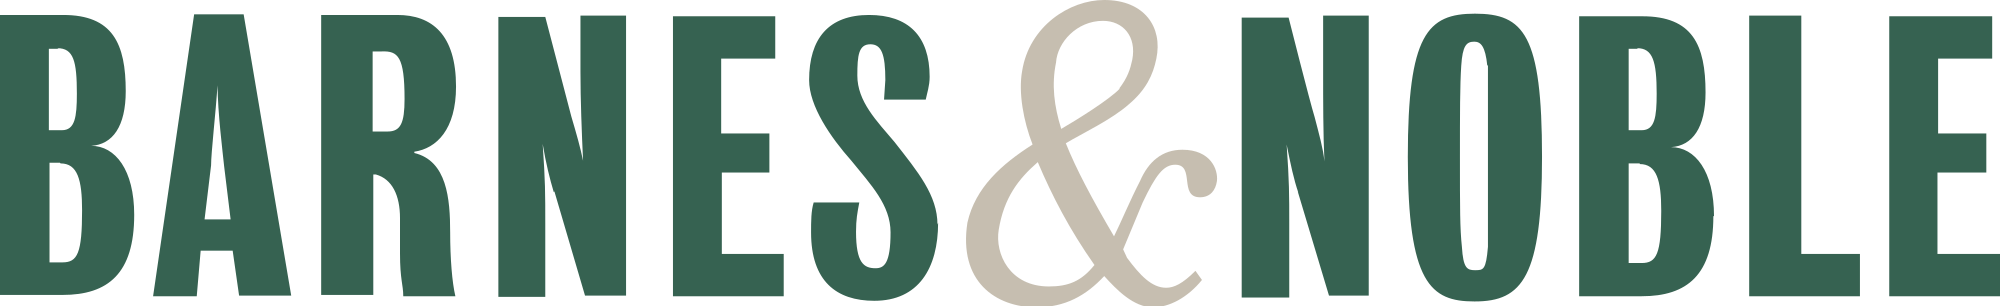 Barnes&Noble-Logo